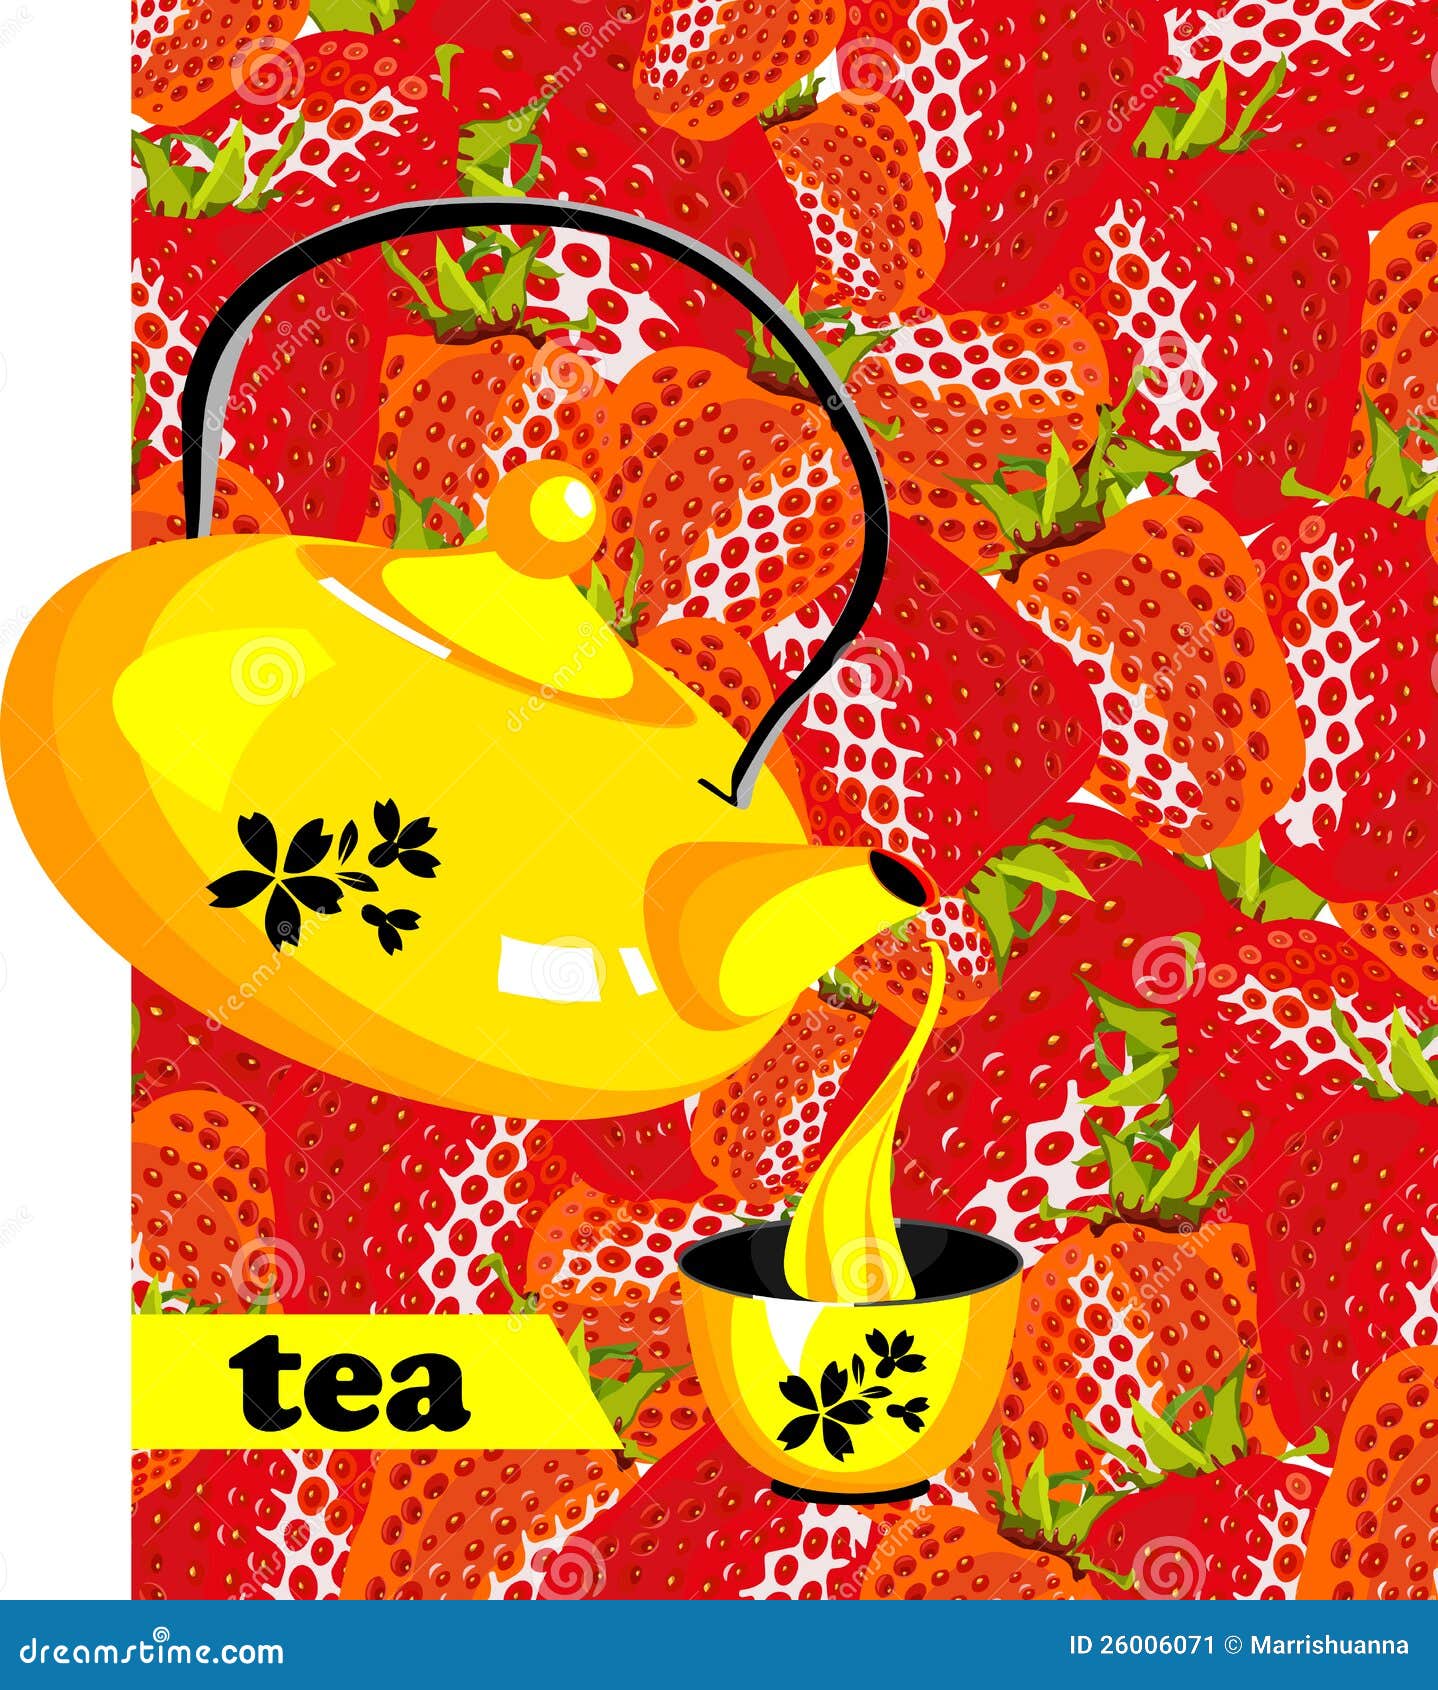 strawberry tea clipart - photo #3